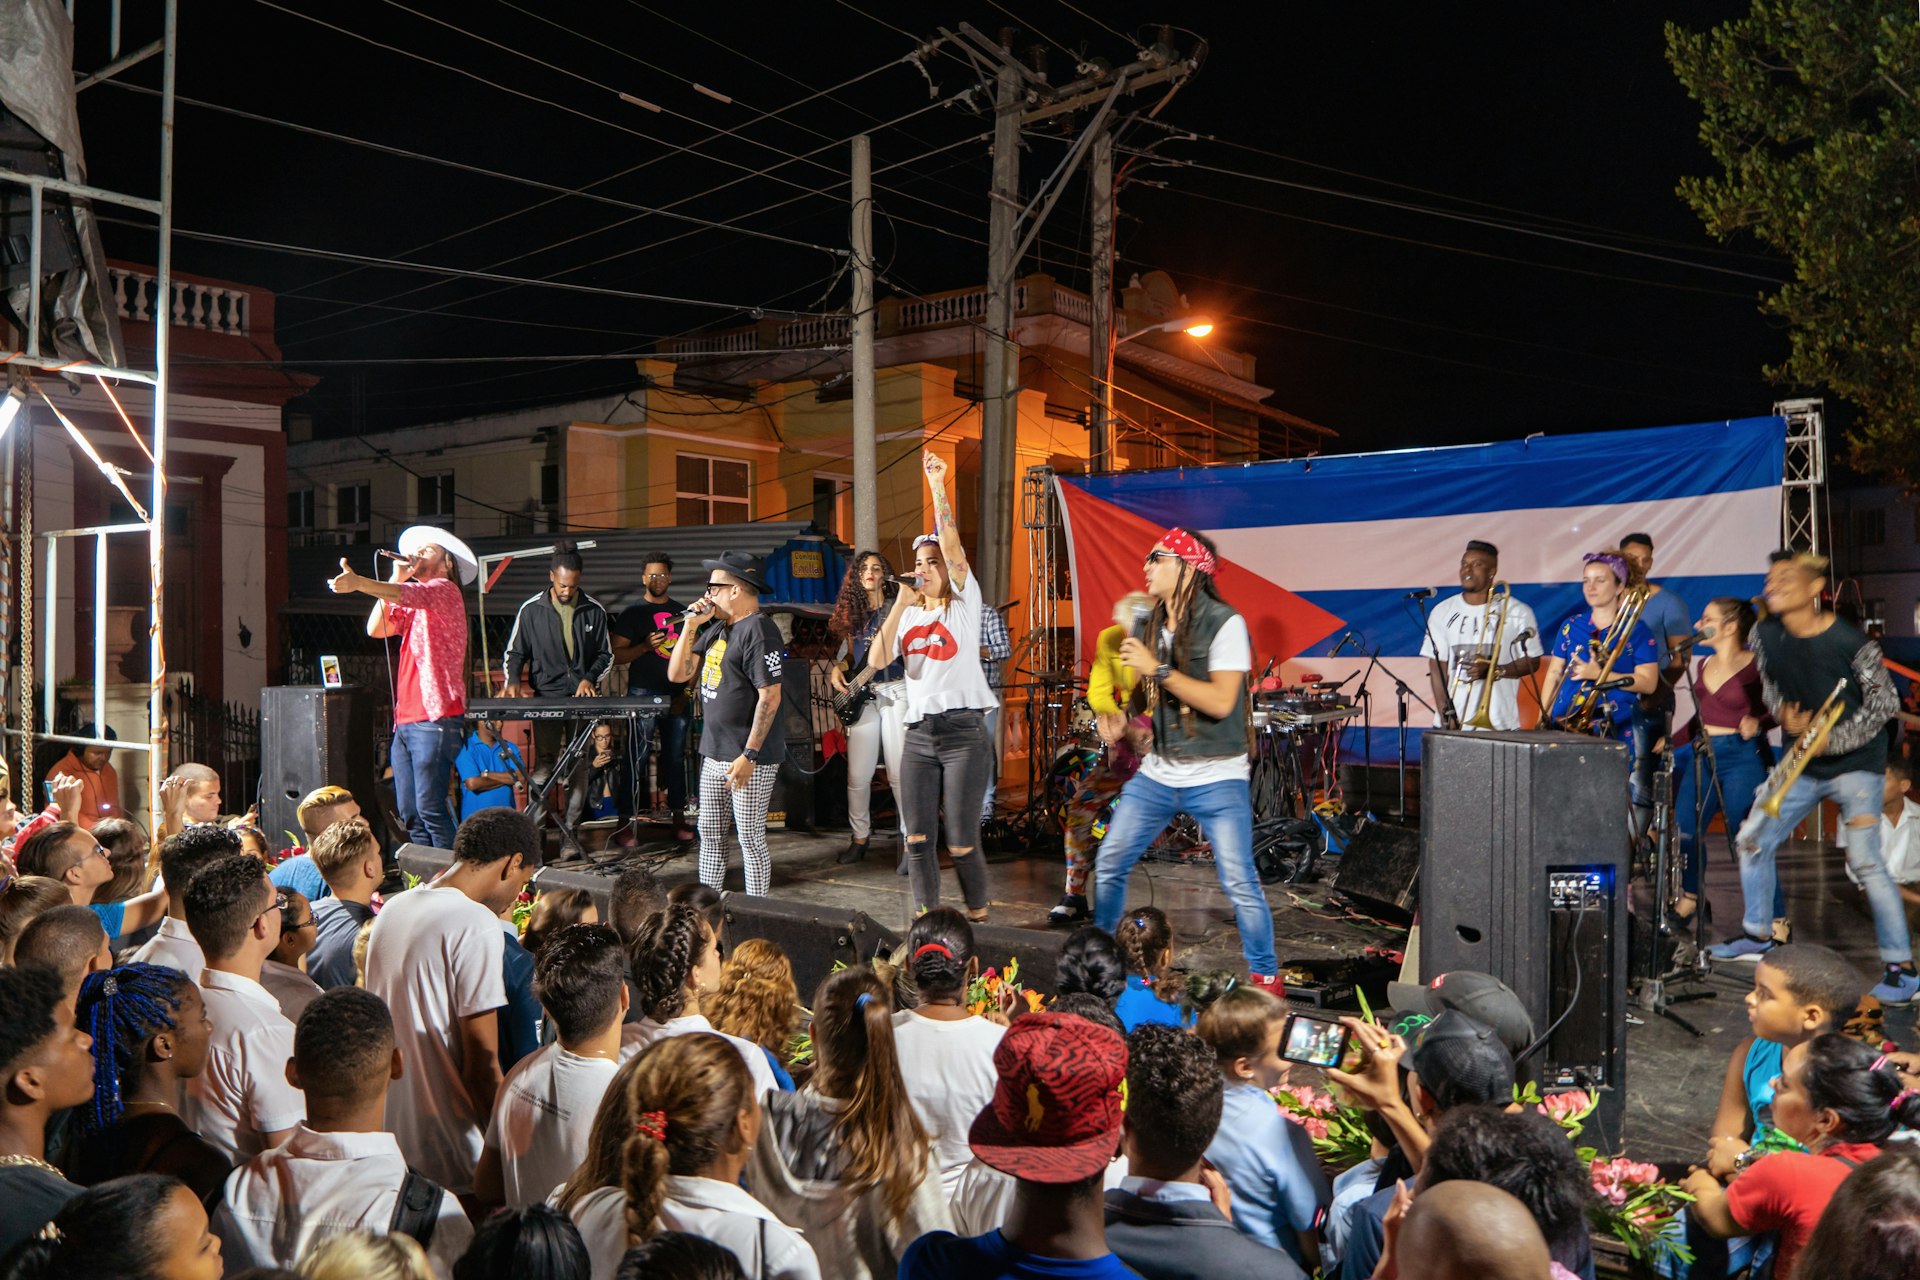 Night performance by the Qva Libre music group during a public street show in Santa Clara, Cuba